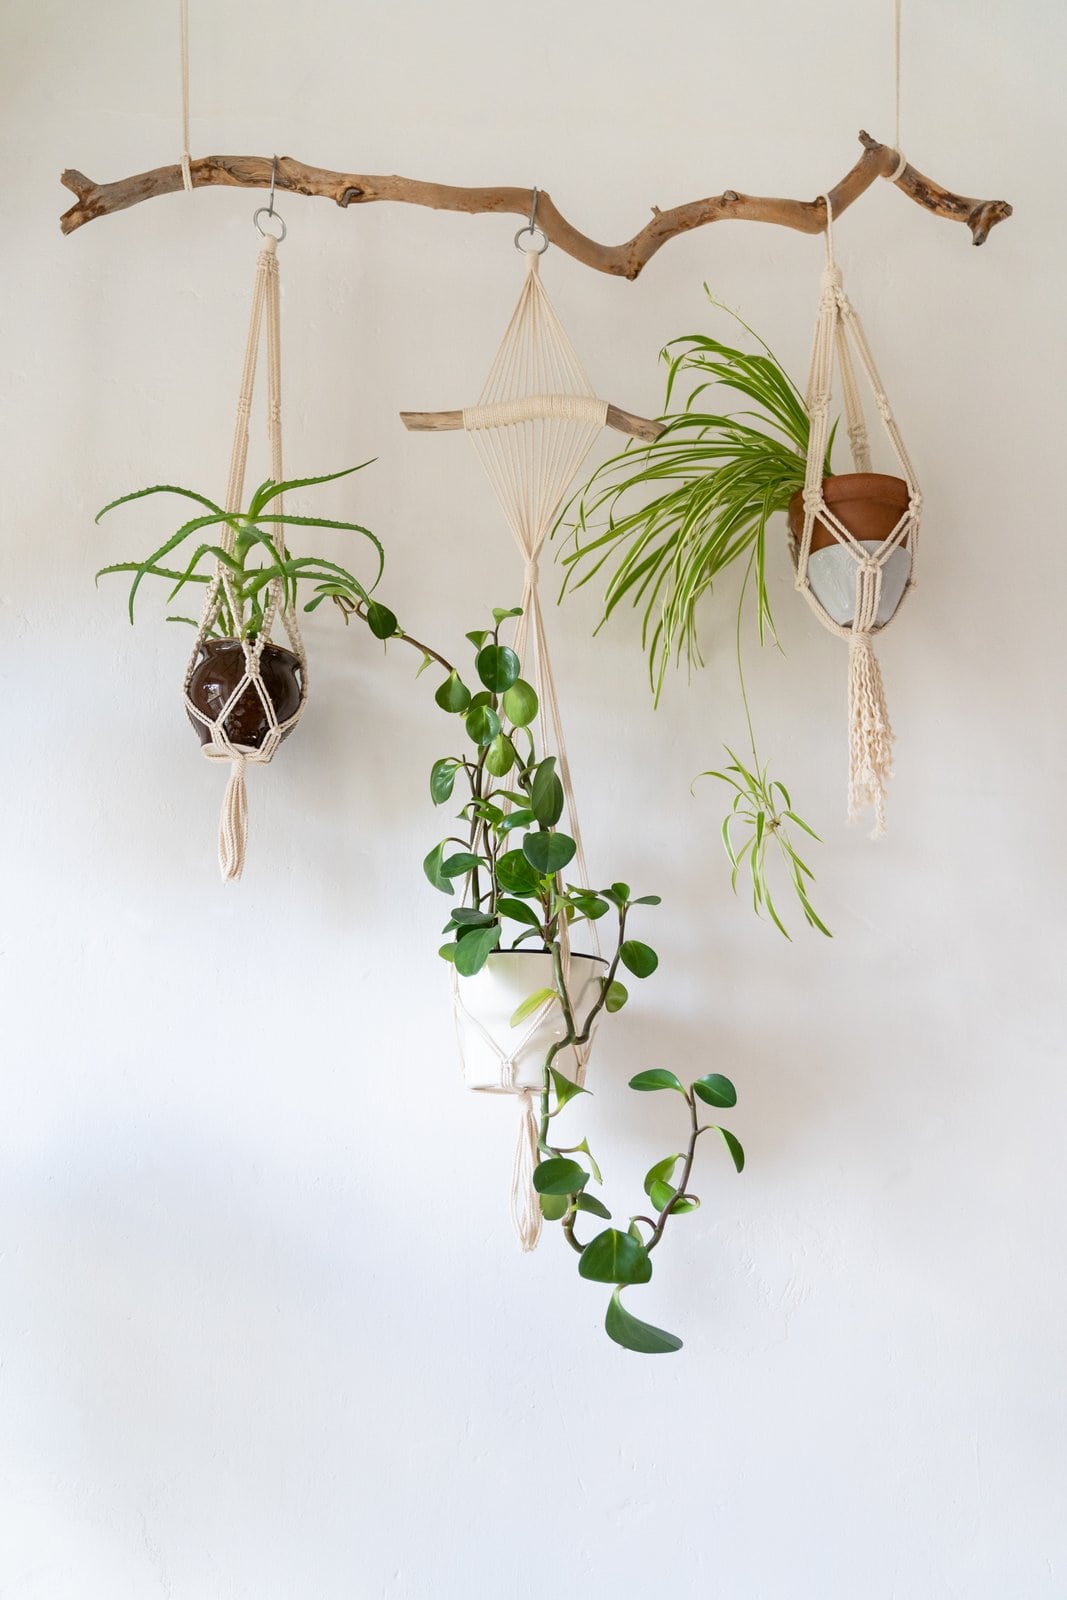 Indoor plants decorating: Branch with decorative macrame plant hangers suspended